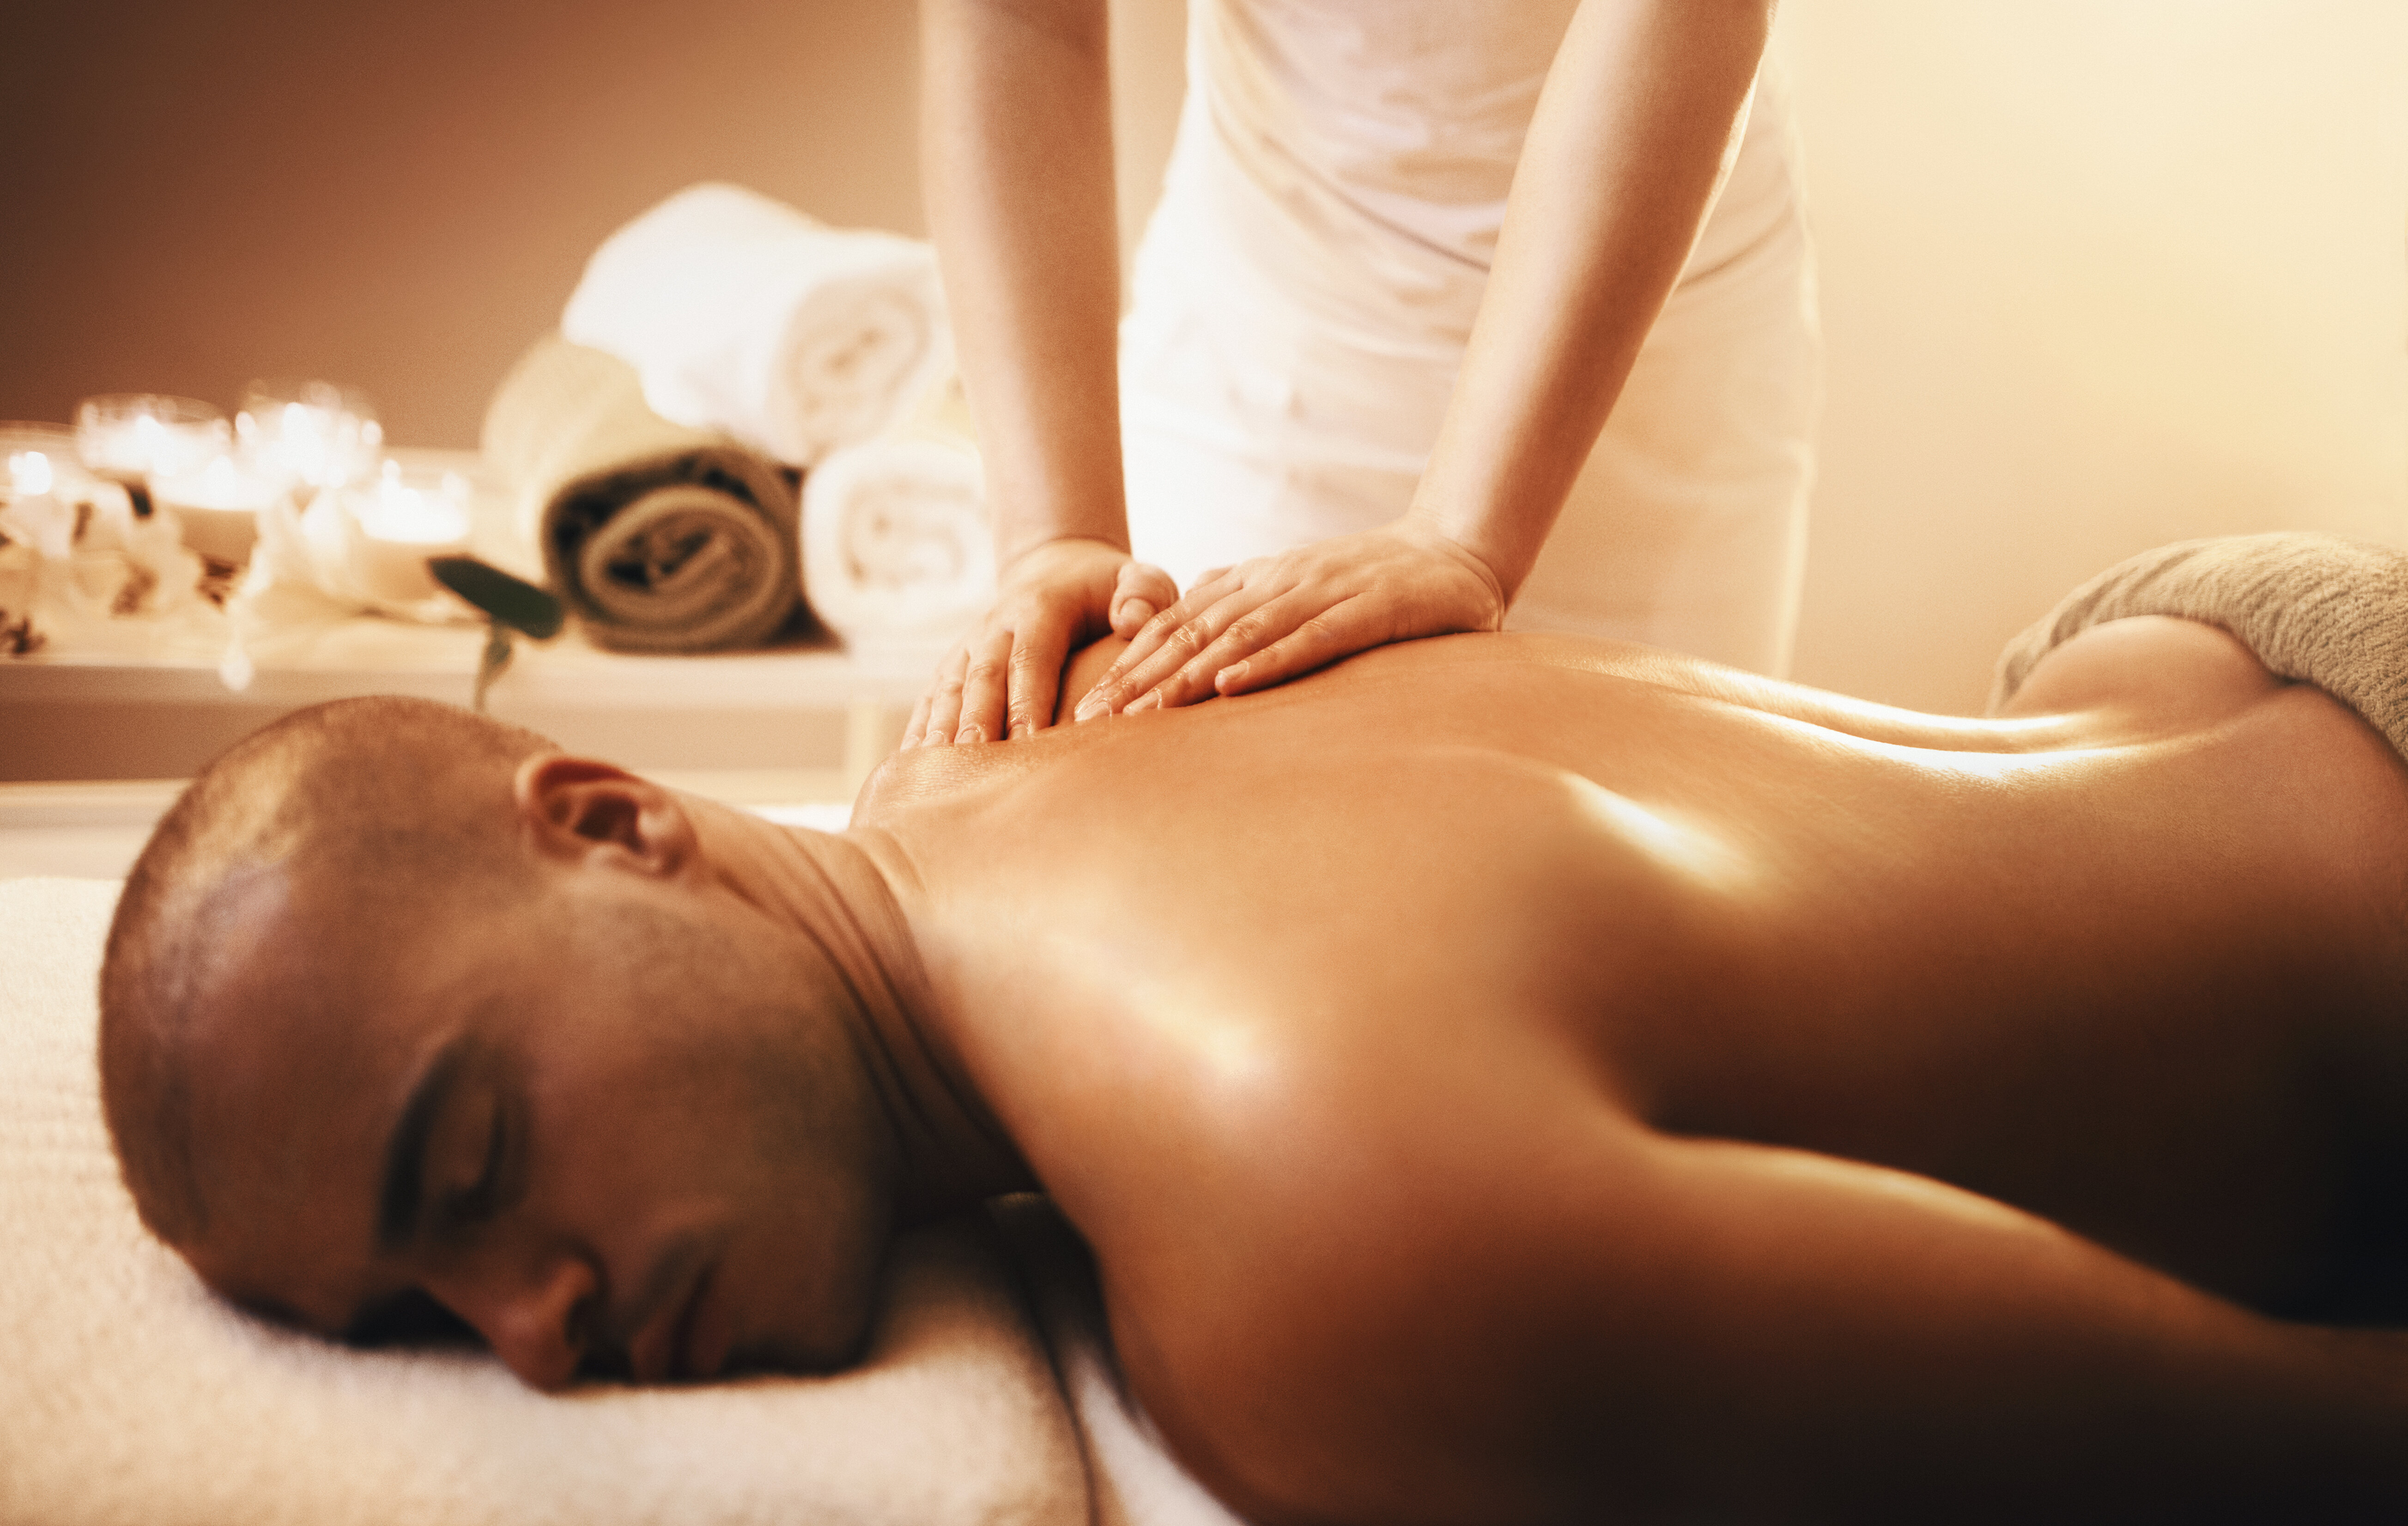 Onlyfans massage. Массаж релаксирующий для мужчин. Спа массаж для мужчин. Релакс массаж для мужчин. Массаж картинки.